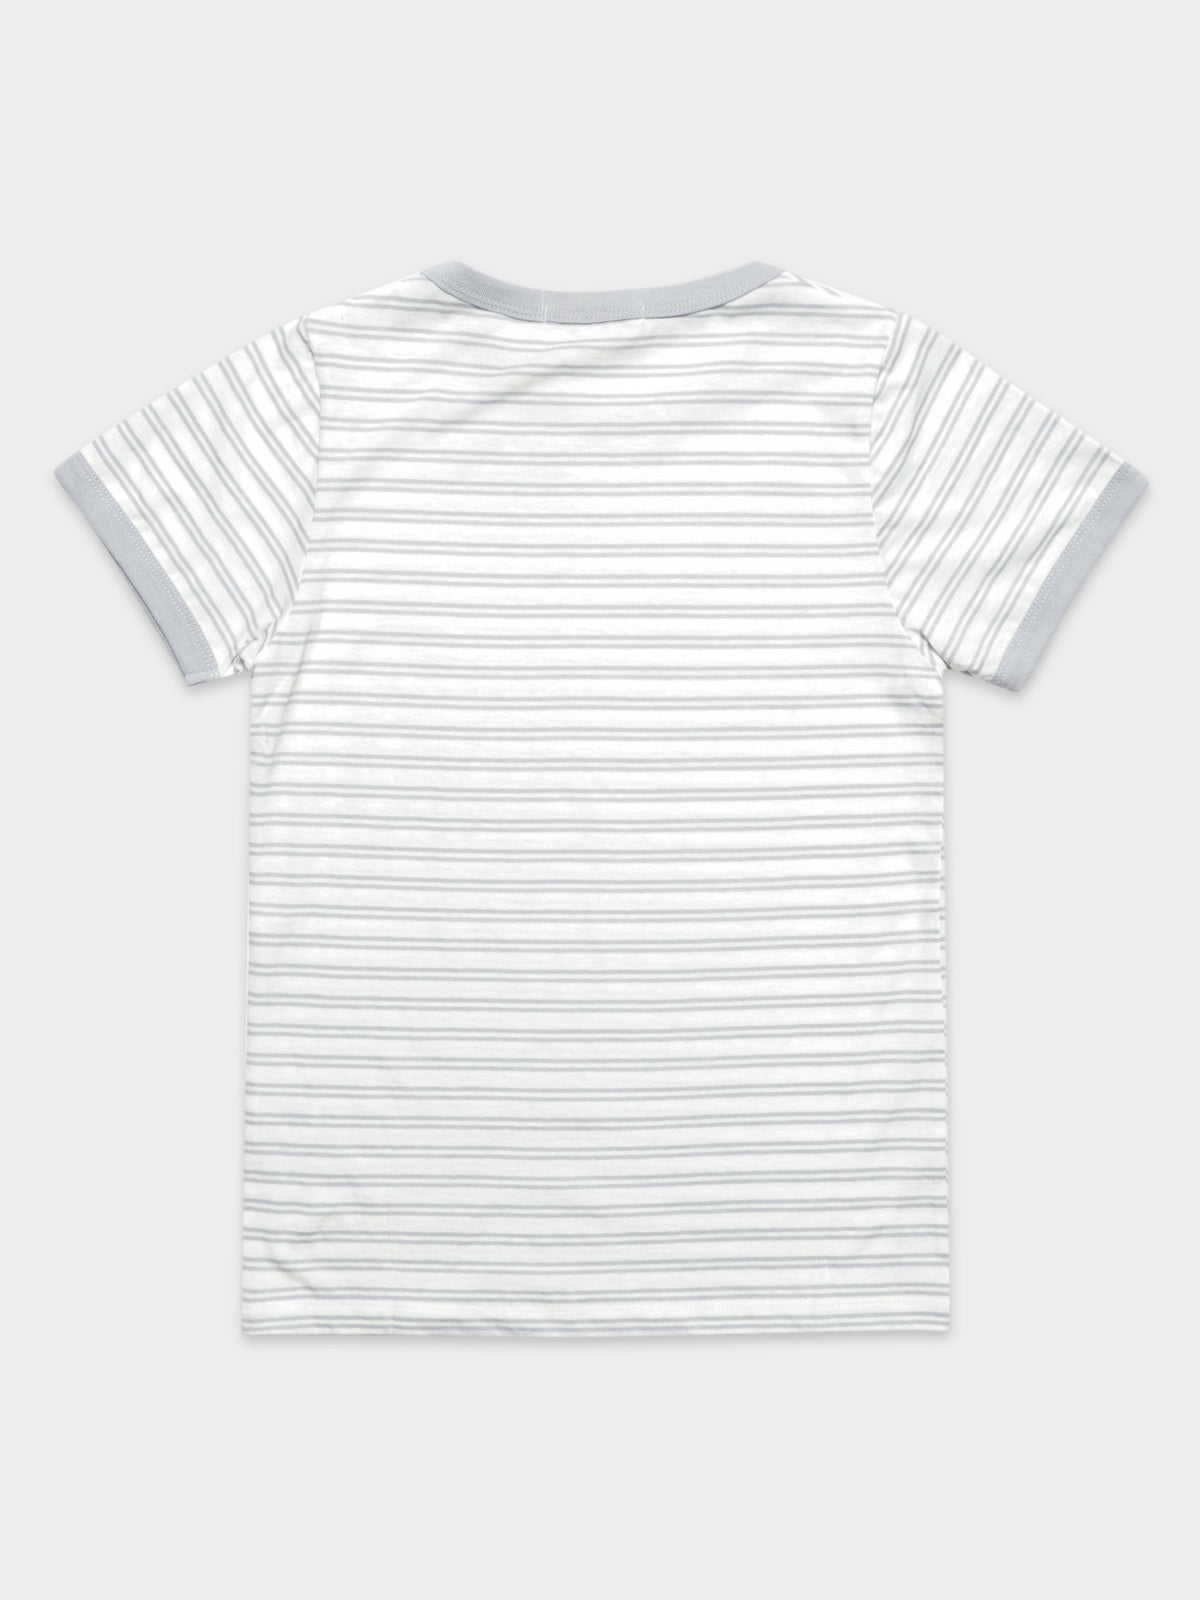 Salt Lake Ringer T-Shirt in Cloud Stripe